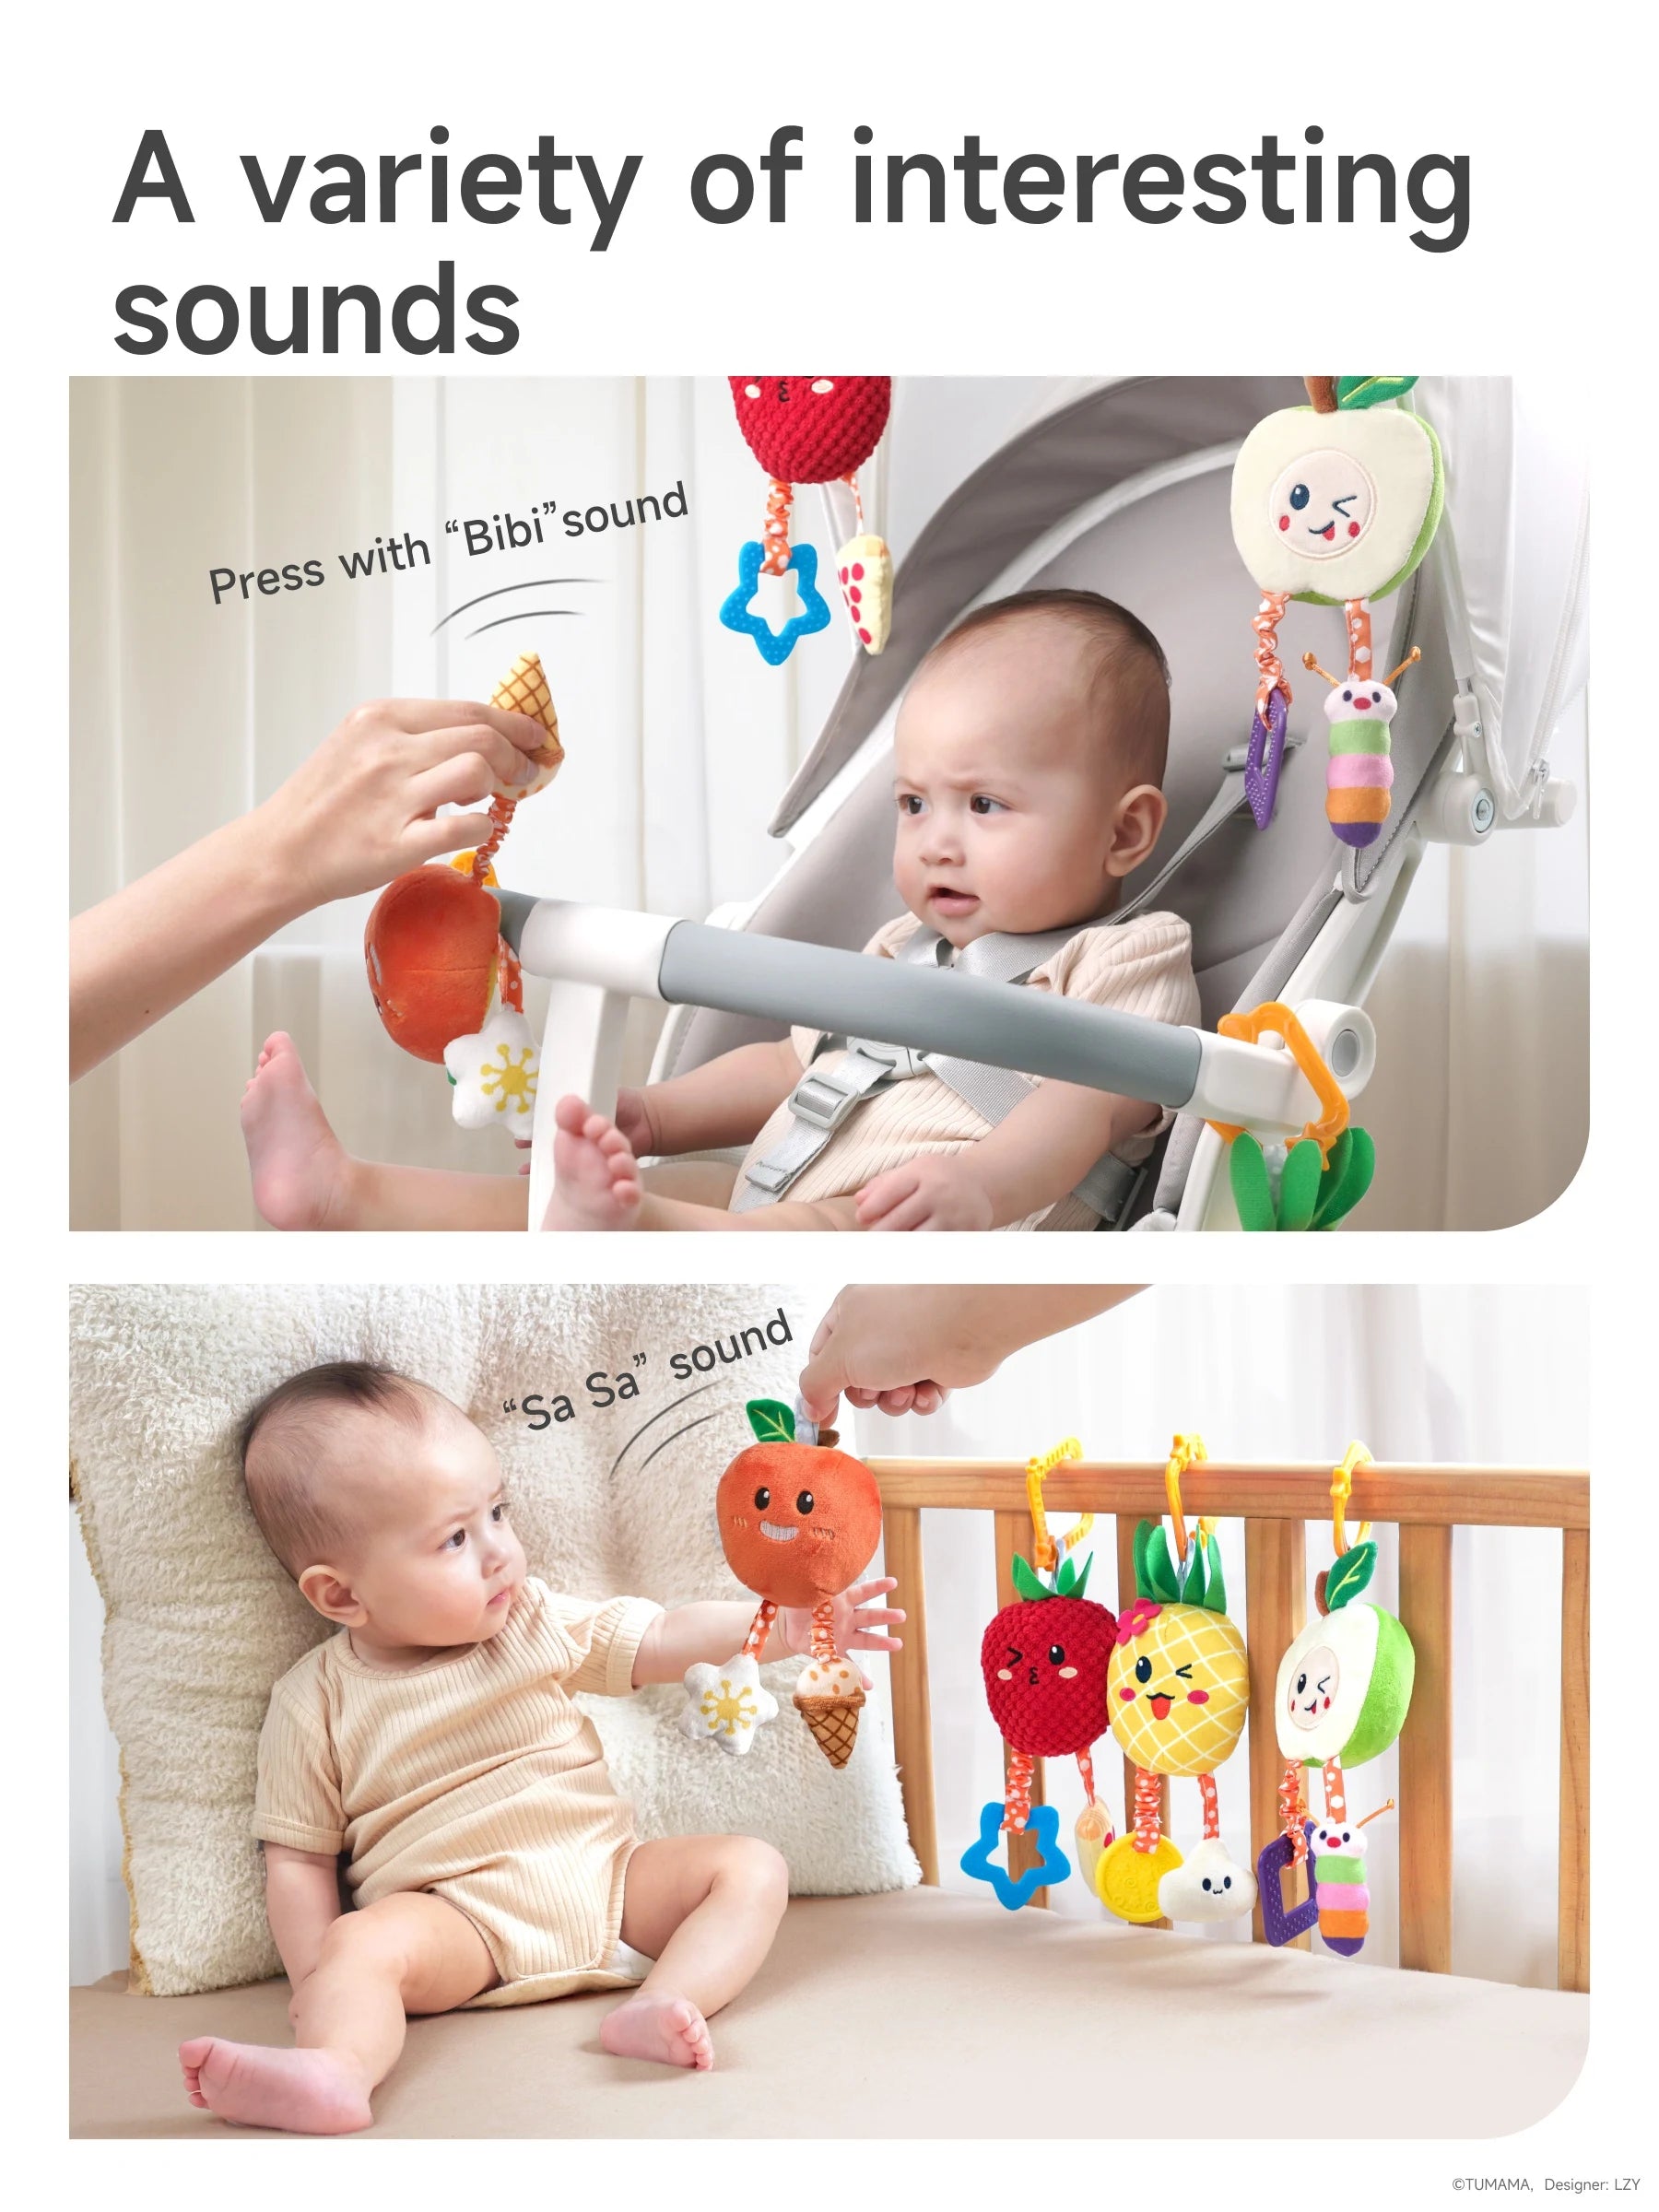 Crib stroller car seat play with hanging fruit rattles